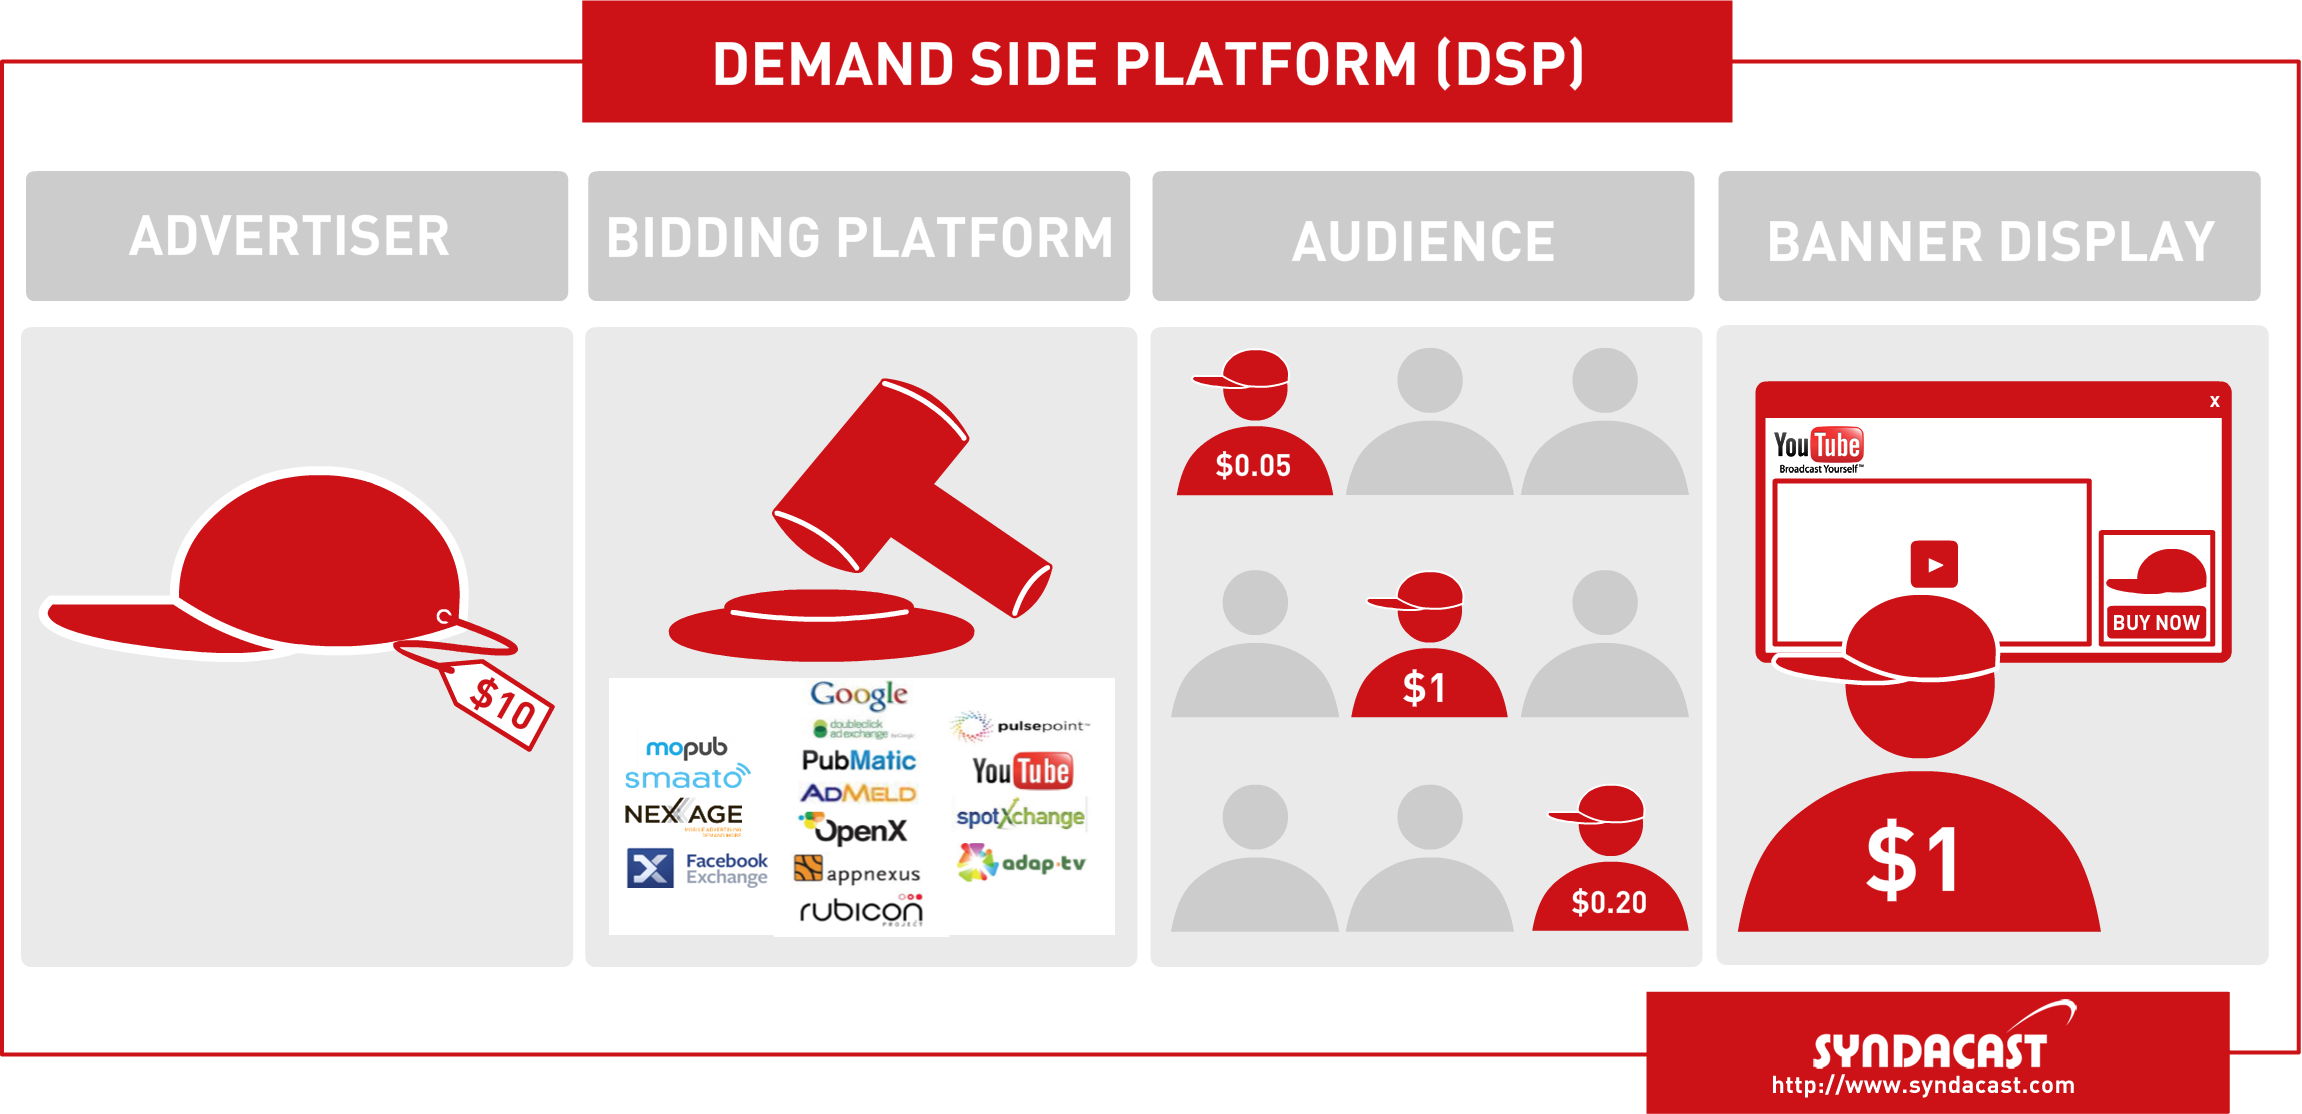 Syndacast DSP Demand Side Platform